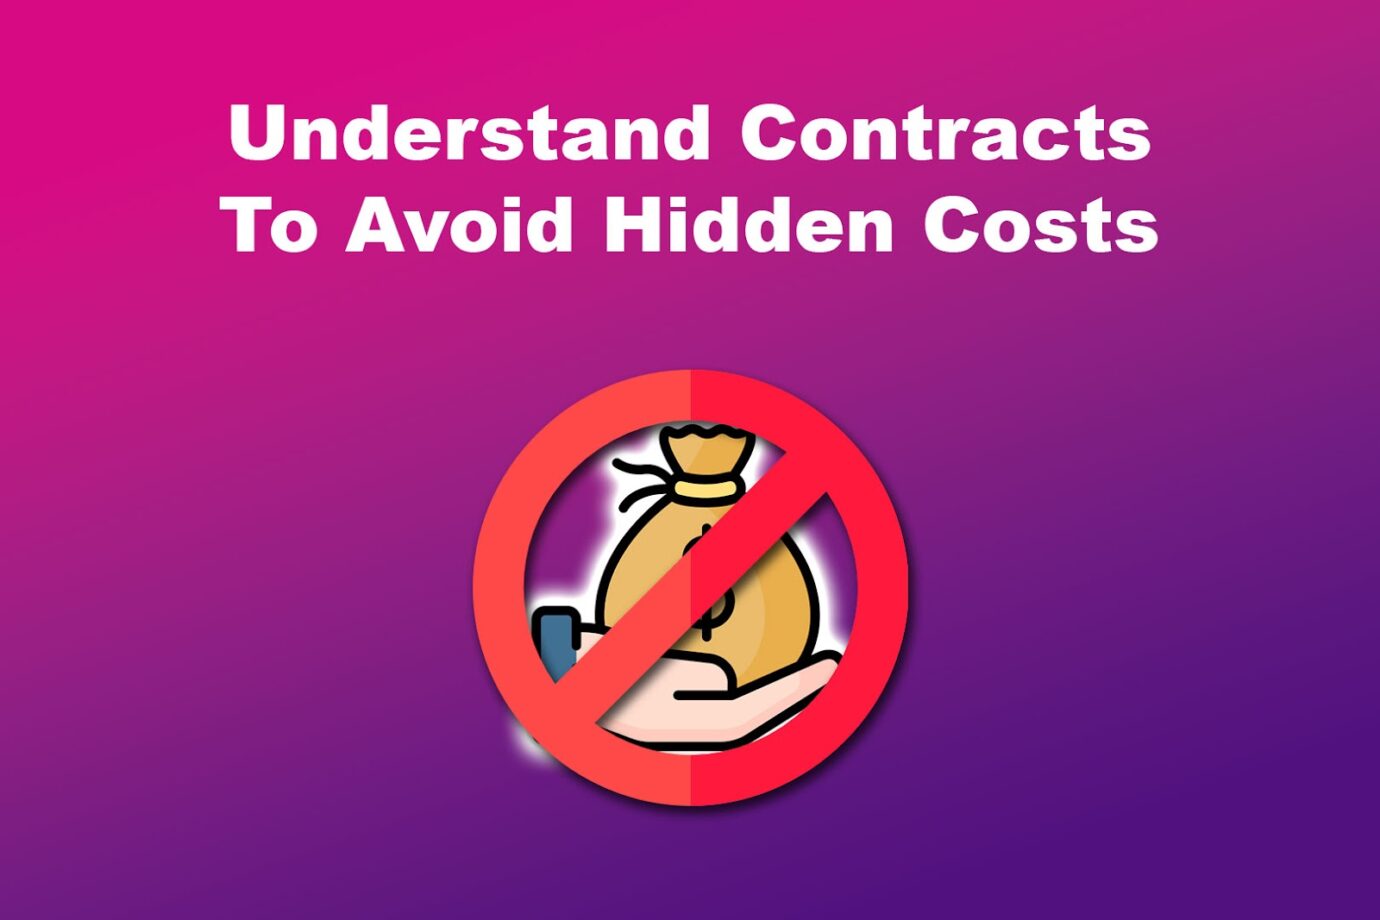 Understand Contract Avoid Hidden Cost Outsourcing